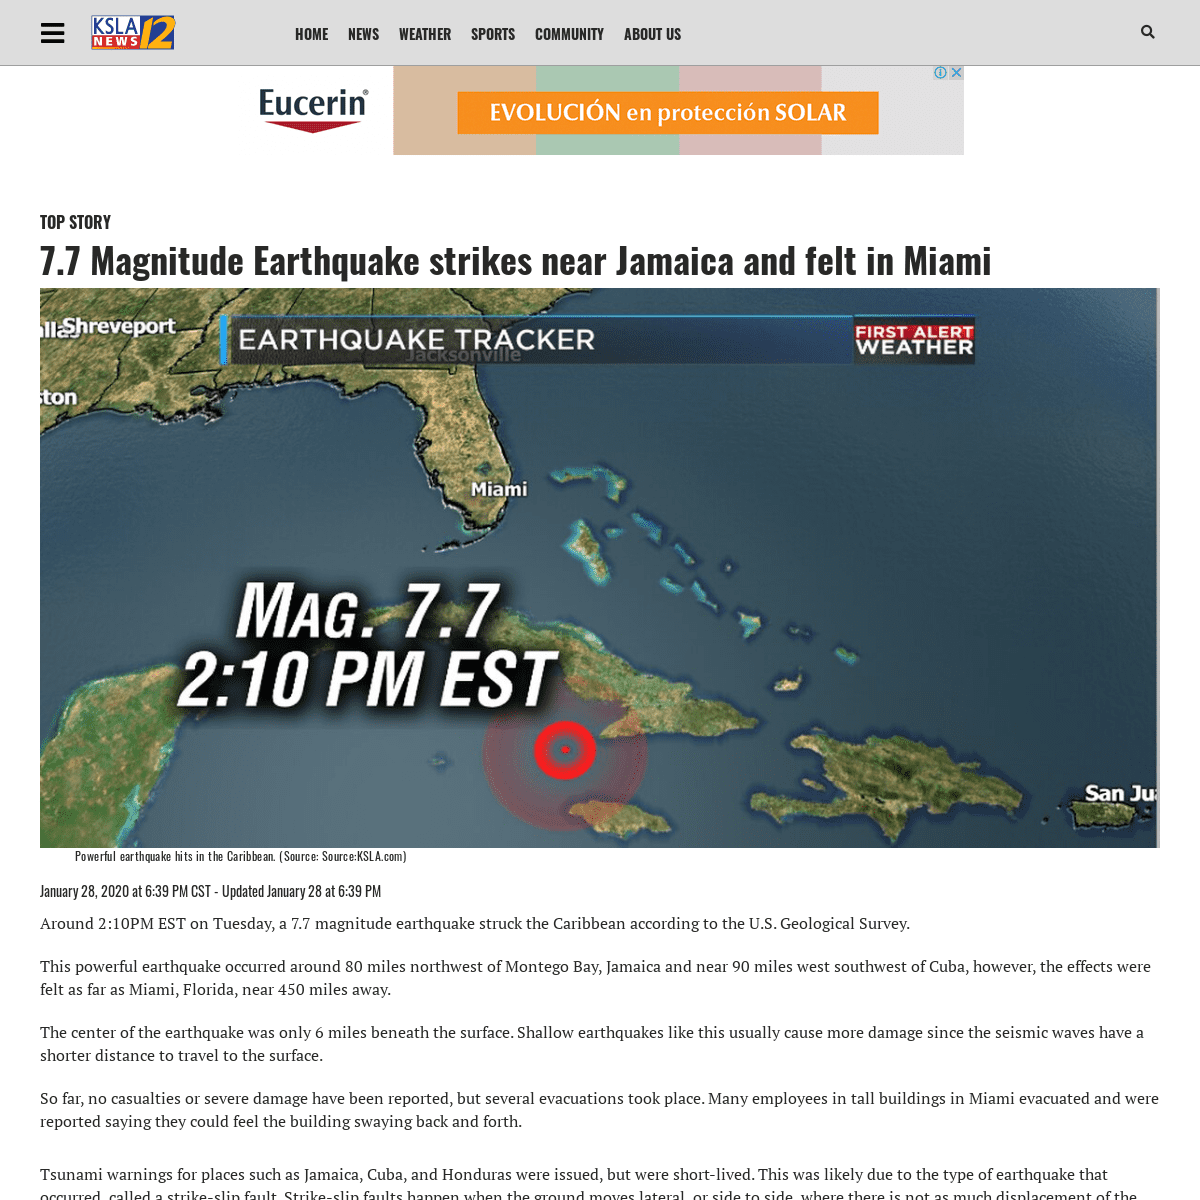 A complete backup of www.ksla.com/2020/01/29/magnitude-earthquake-strikes-near-jamaica-felt-miami/